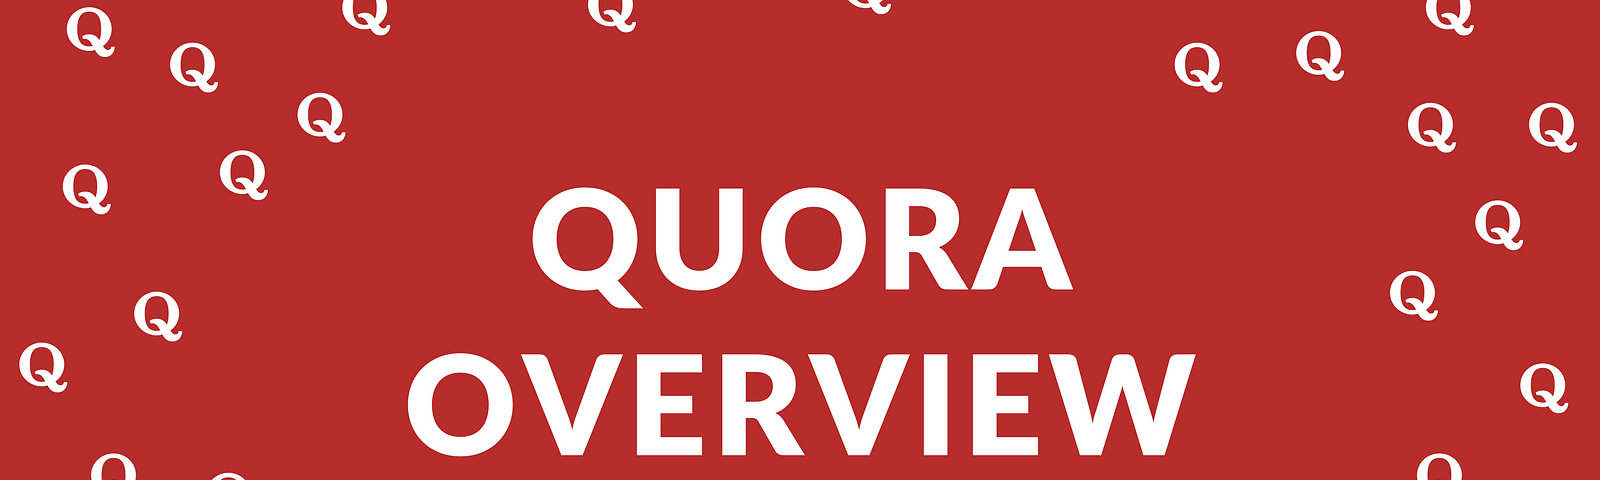 quora overview, quora, how to leverage quora for marketing, quora marketing strategy, quora marketing services, quora tools